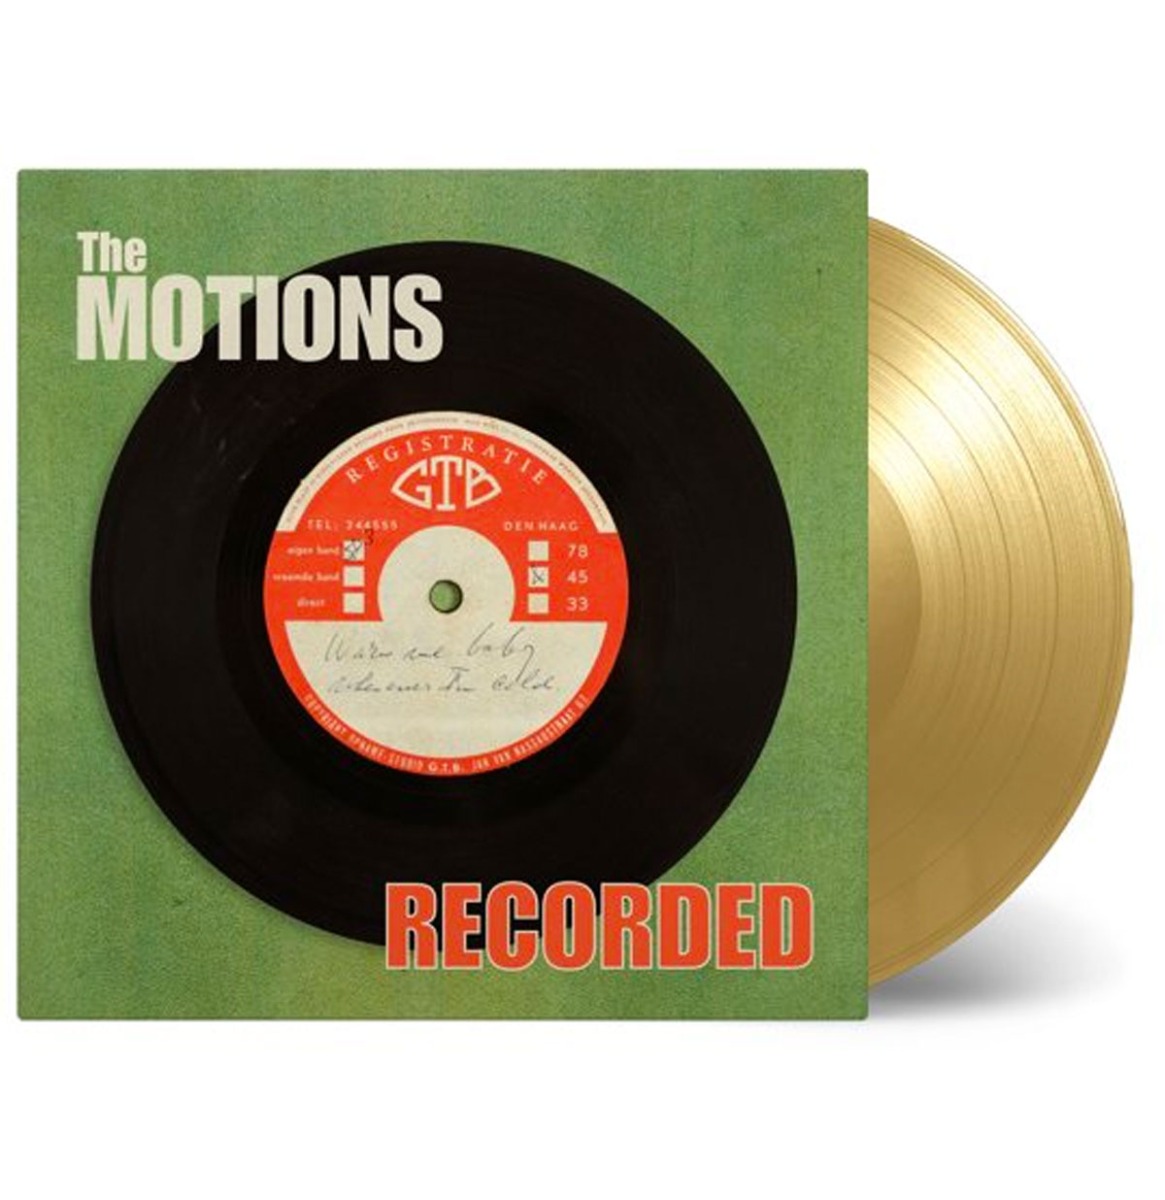 The Motions - Recorded LP Gelimiteerde Editie Op Goudkleurig Vinyl